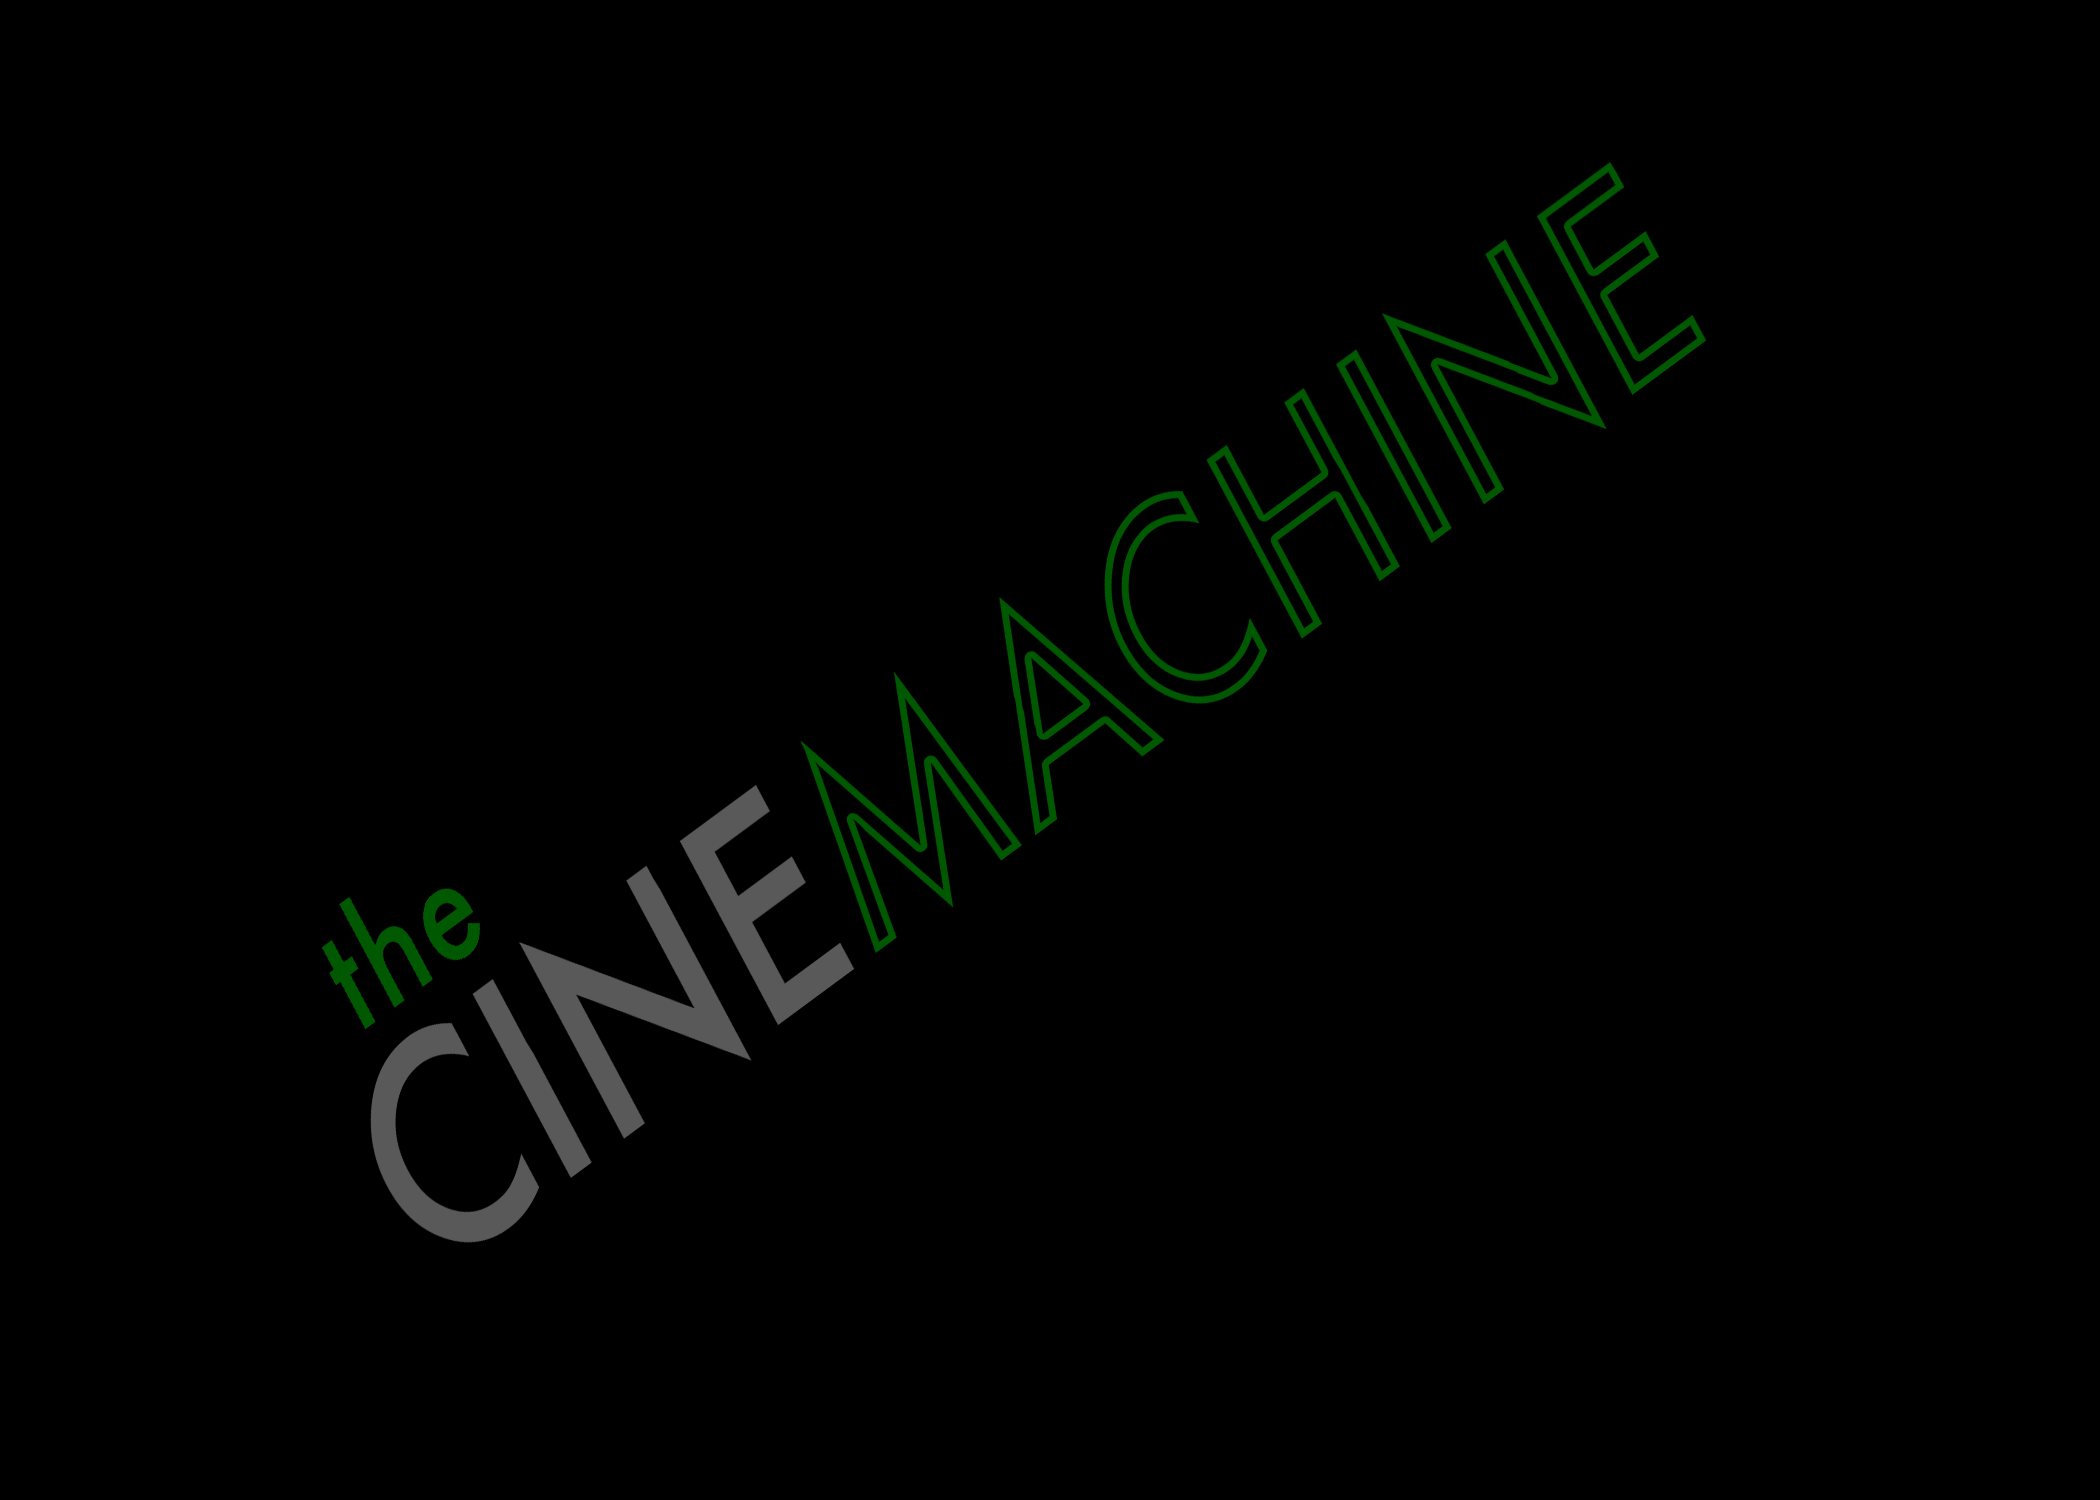 The Cinemachine